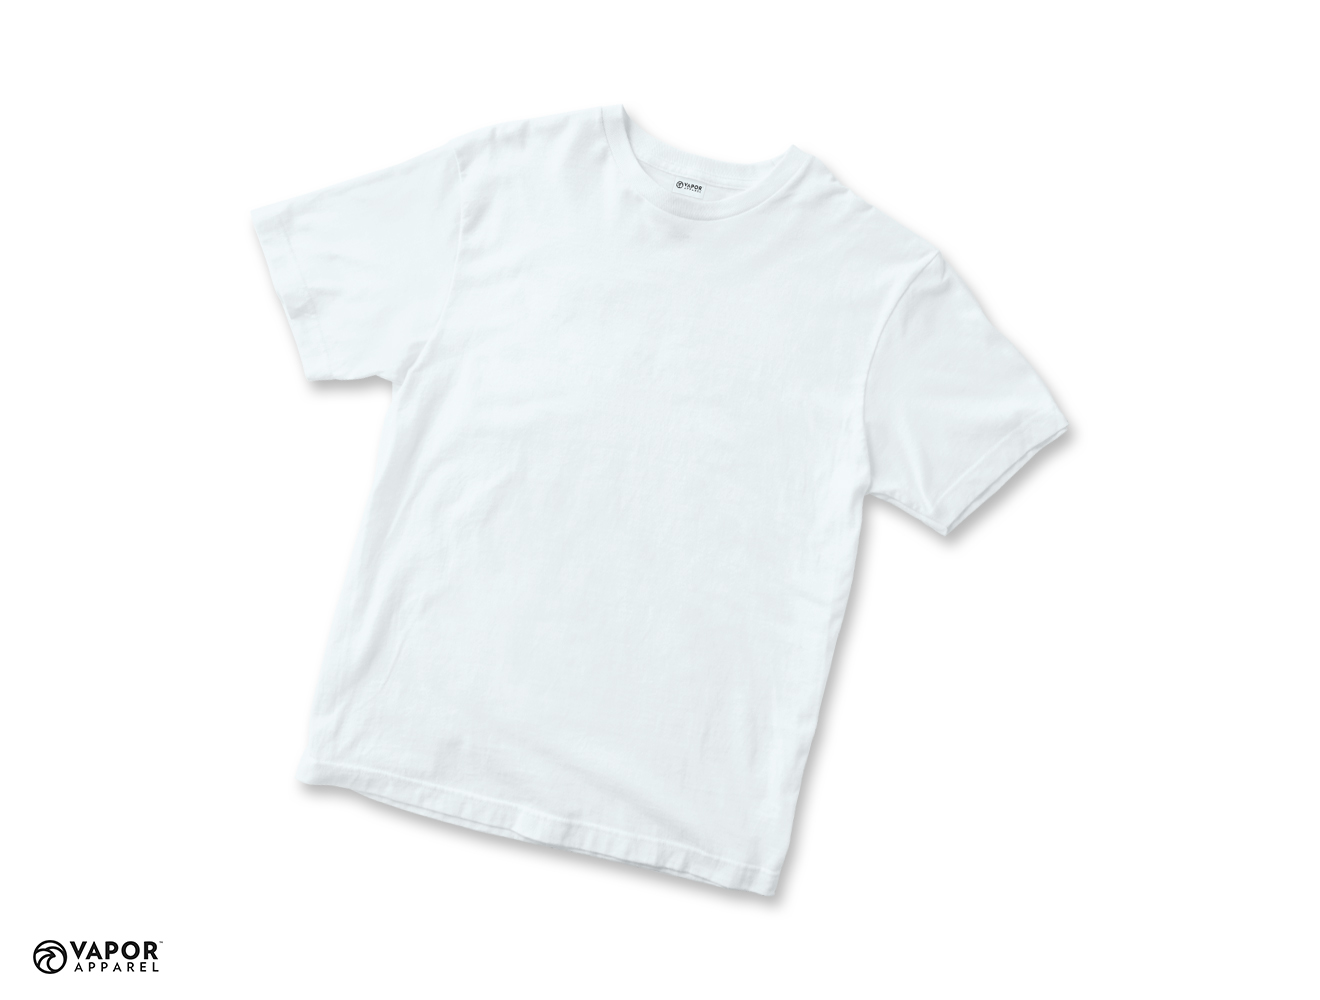 Vapor Sublimation T-Shirt for Adults size XXL - White